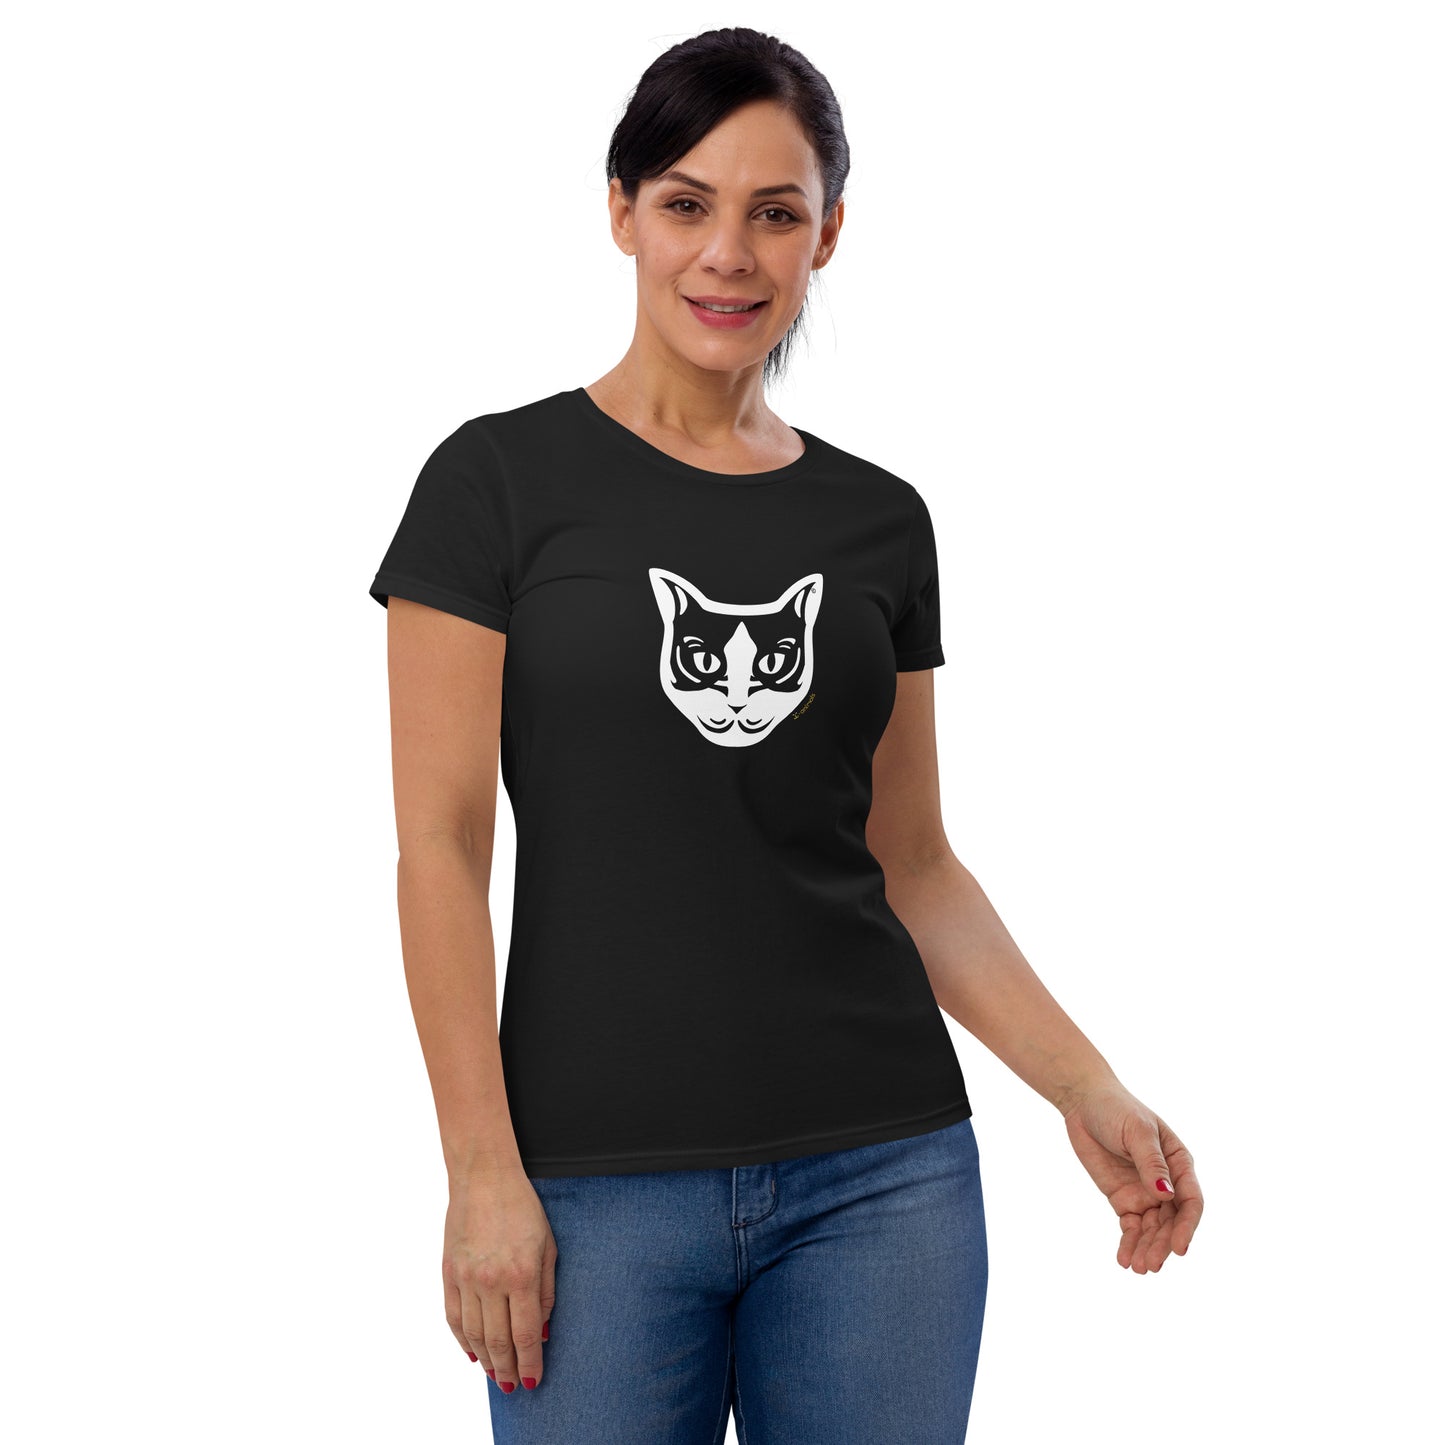 Camiseta mujer manga corta - Gato Blanco y Negro - Tribal